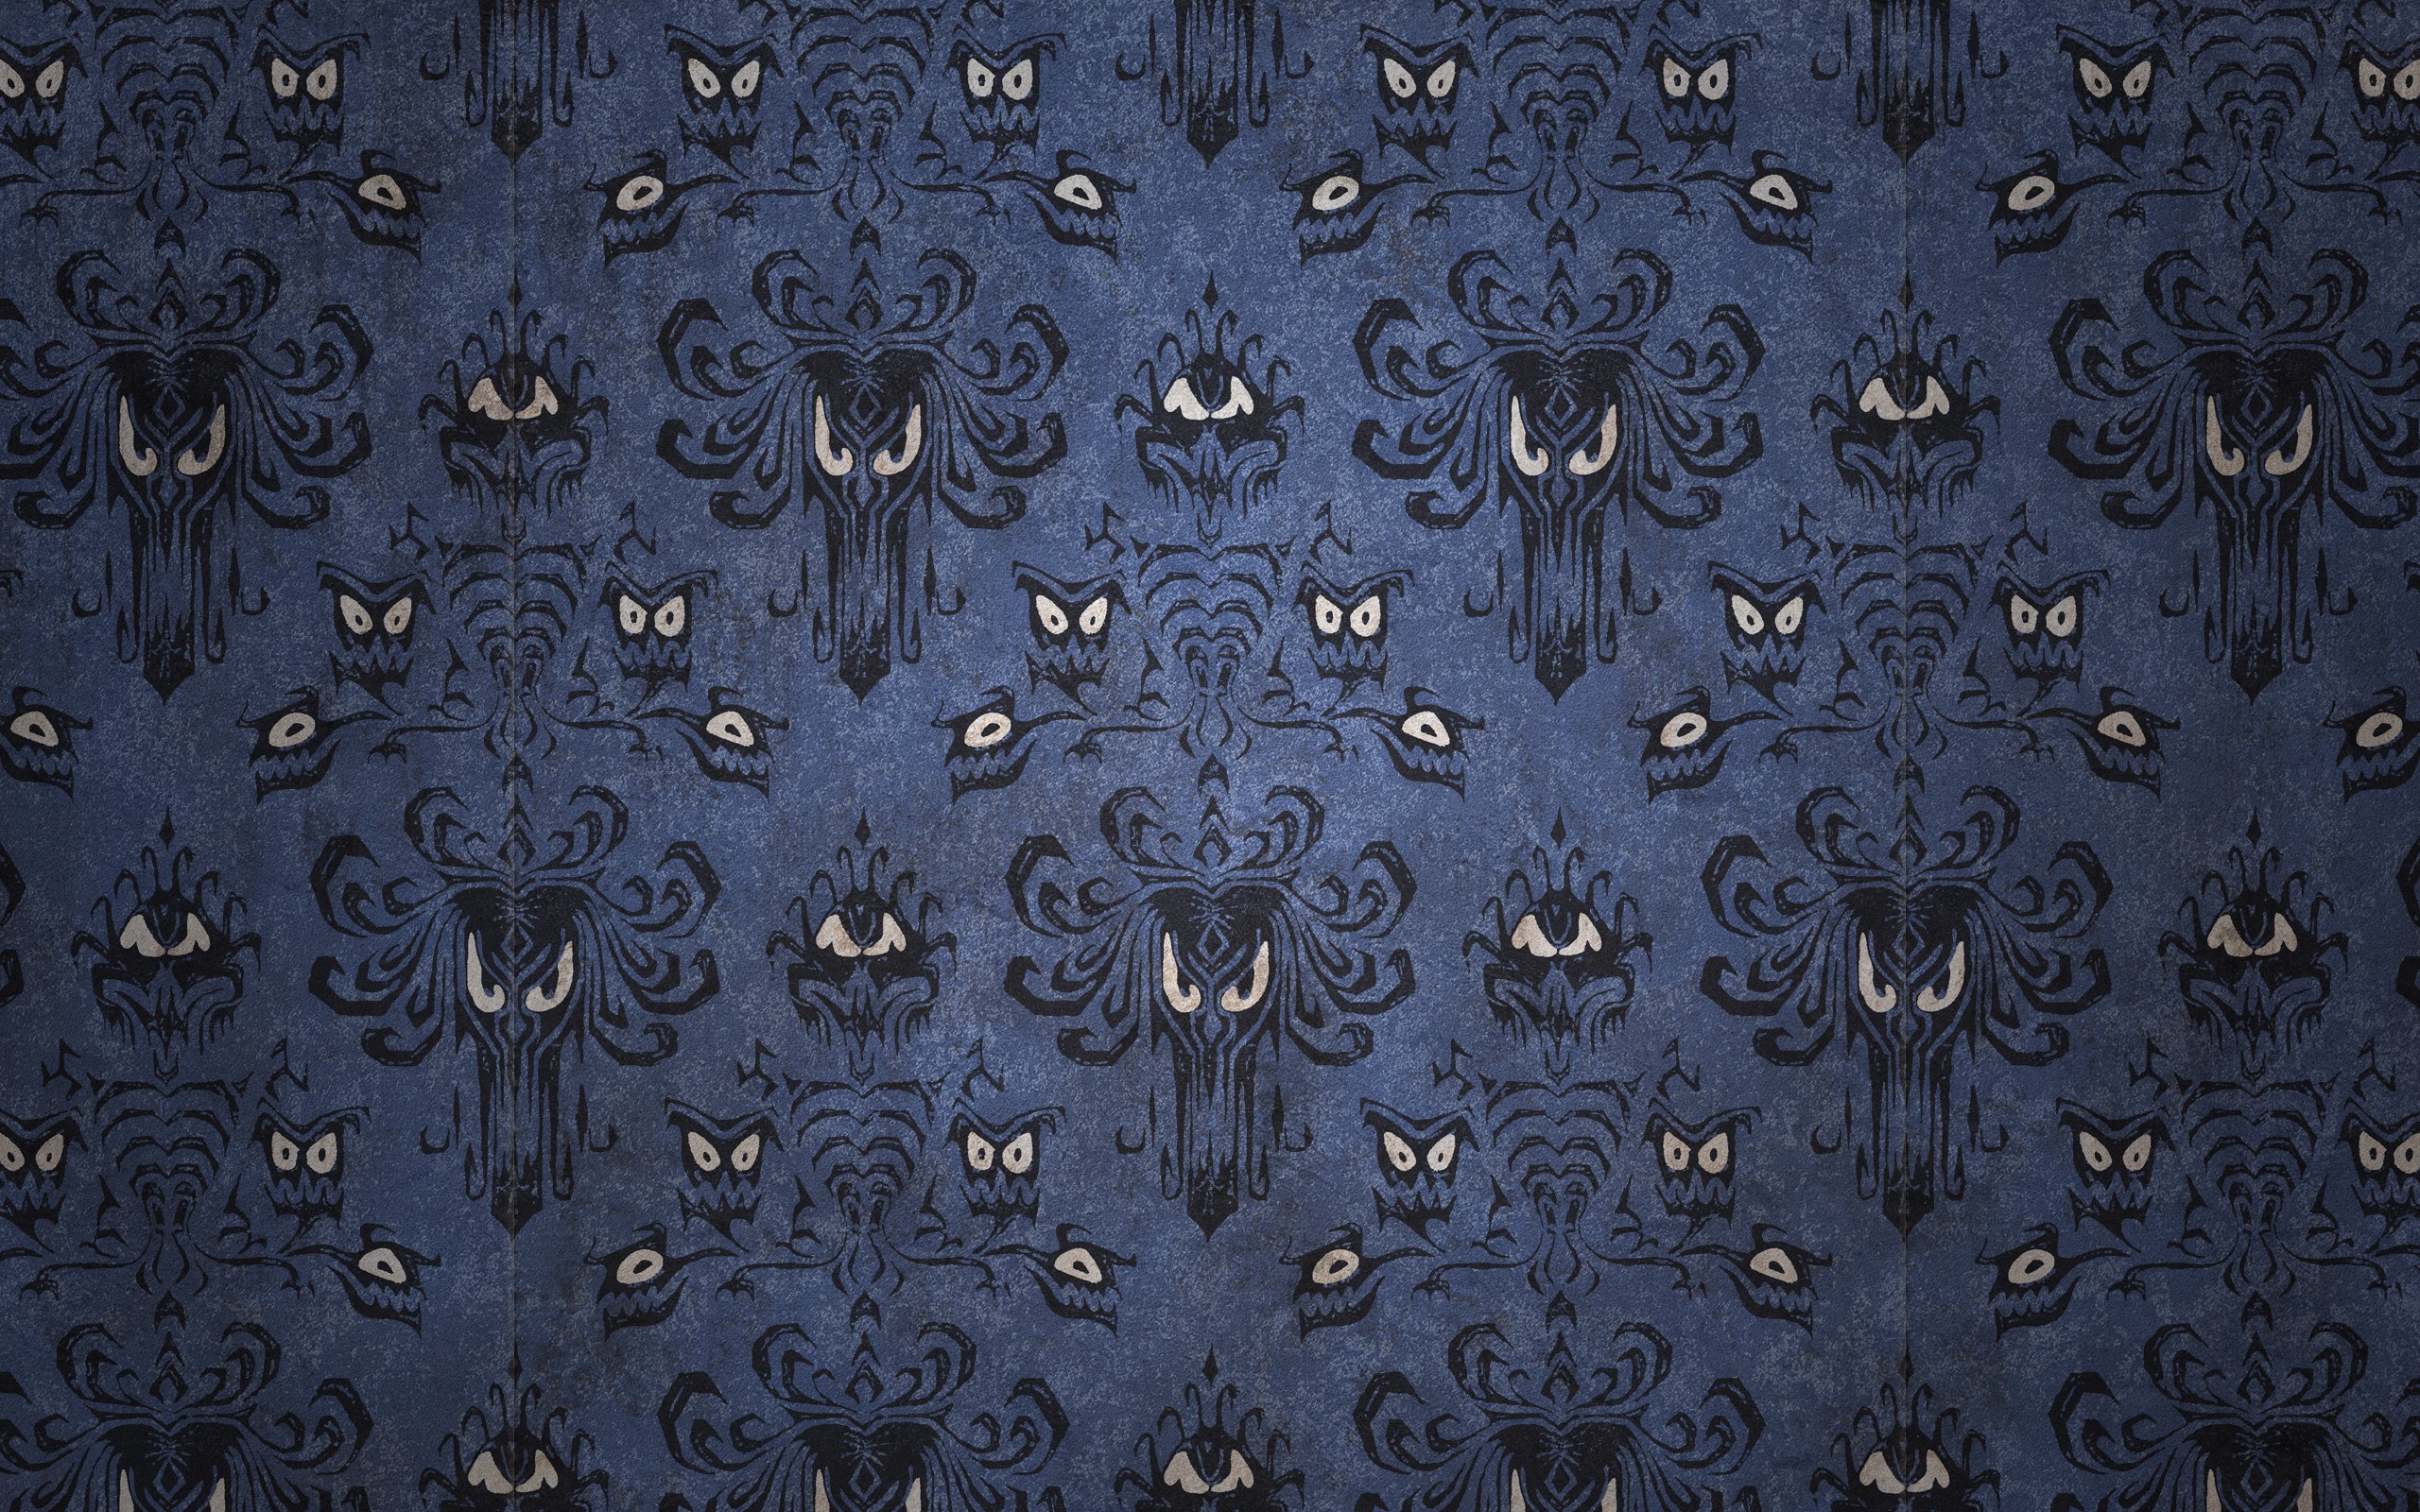 General 2560x1600 Disney haunted mansion texture pattern